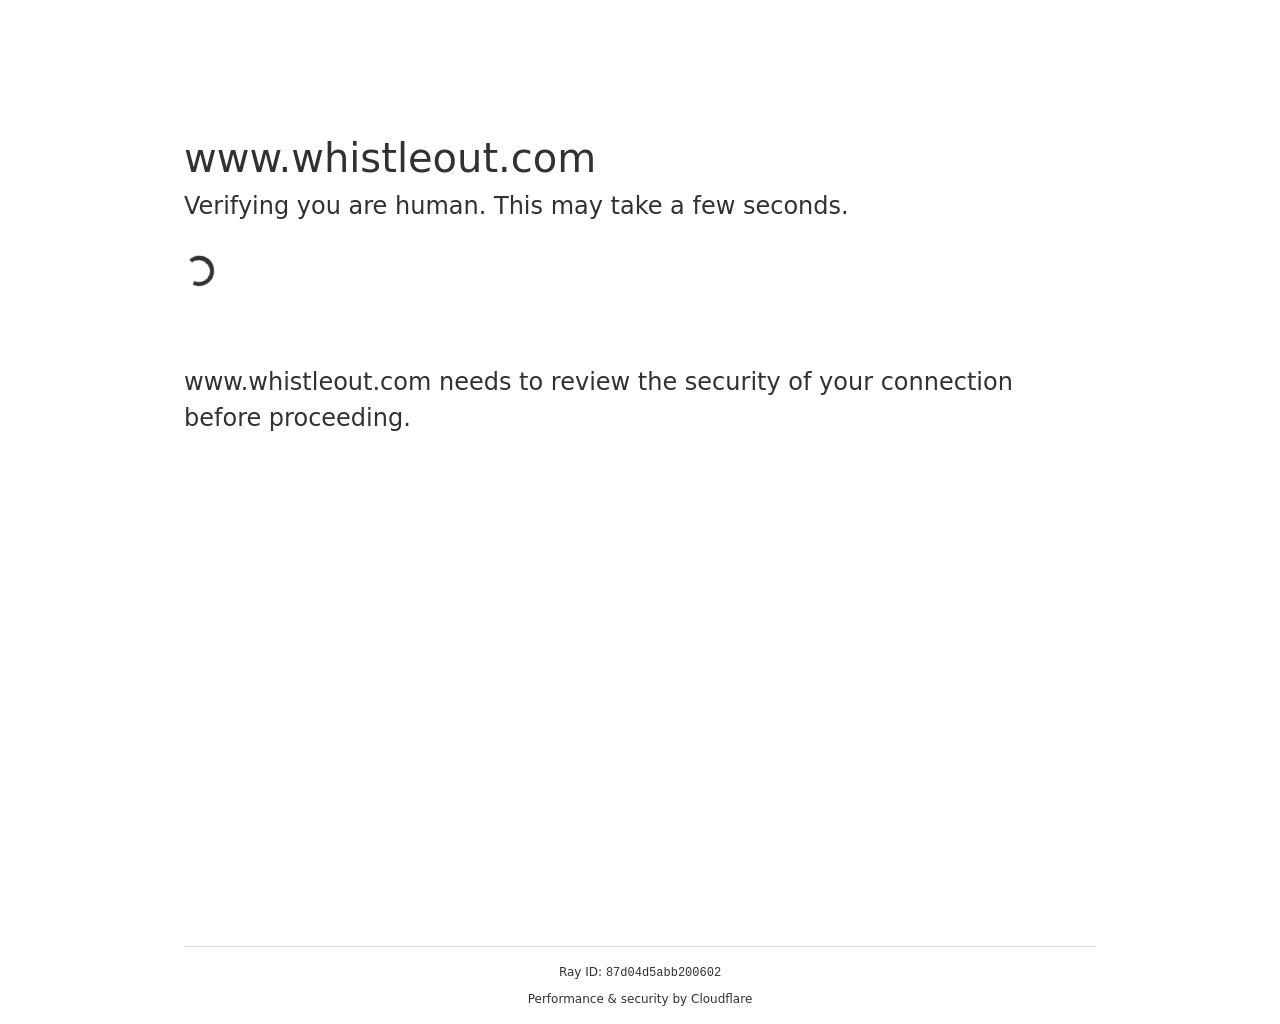 whistleout.com